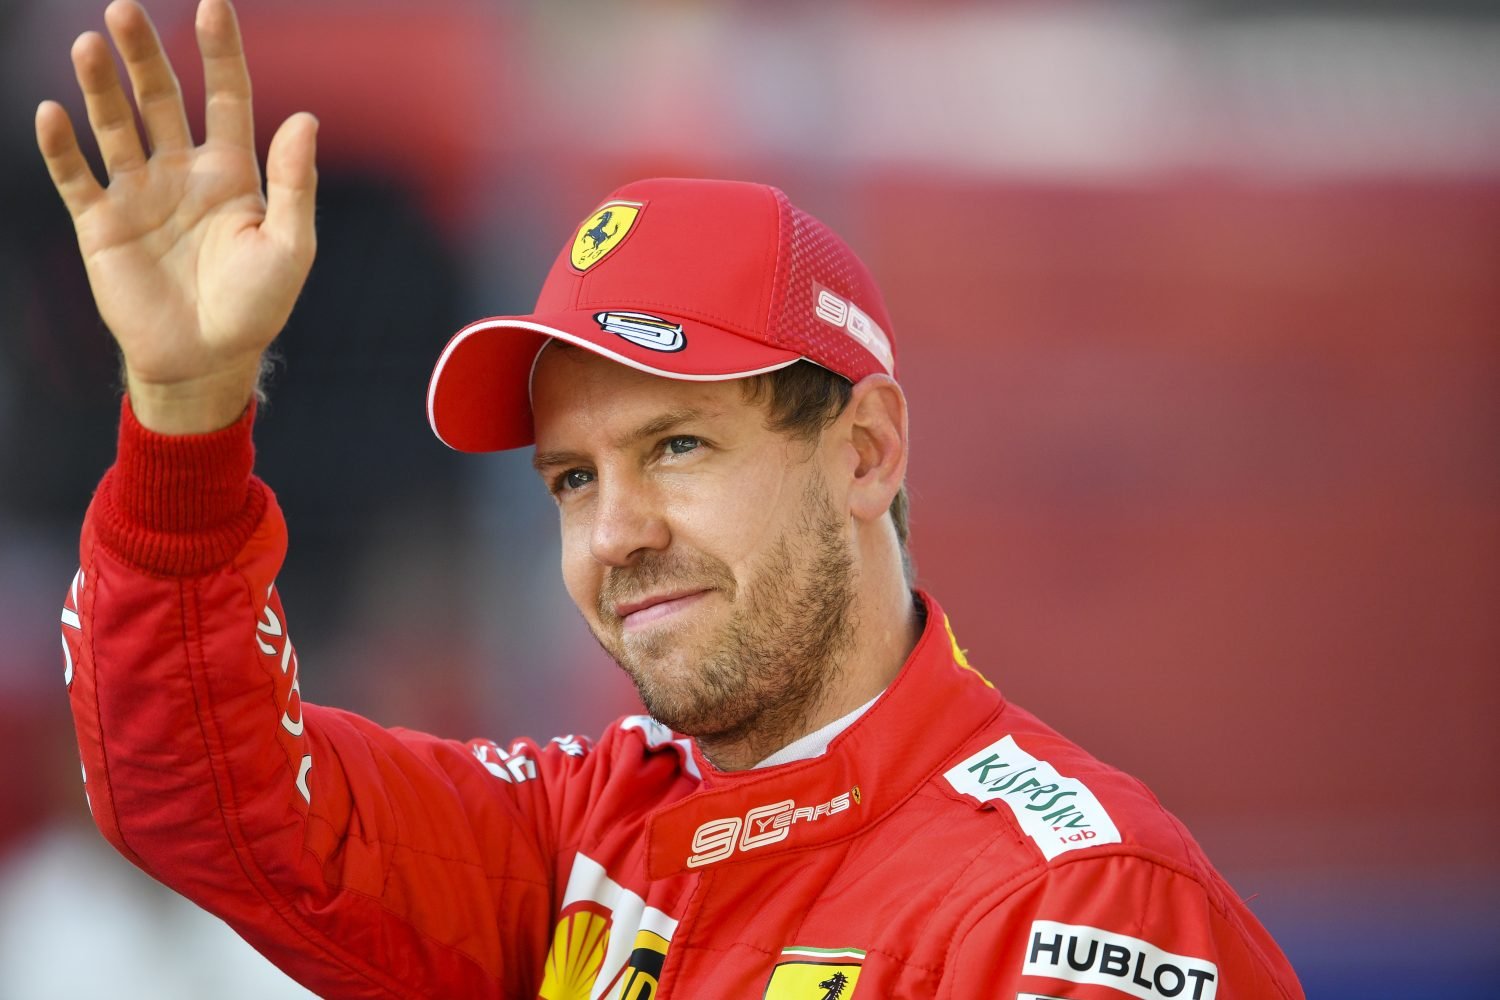  Sebastian Vettel va pleca de la Ferrari la finalul anului